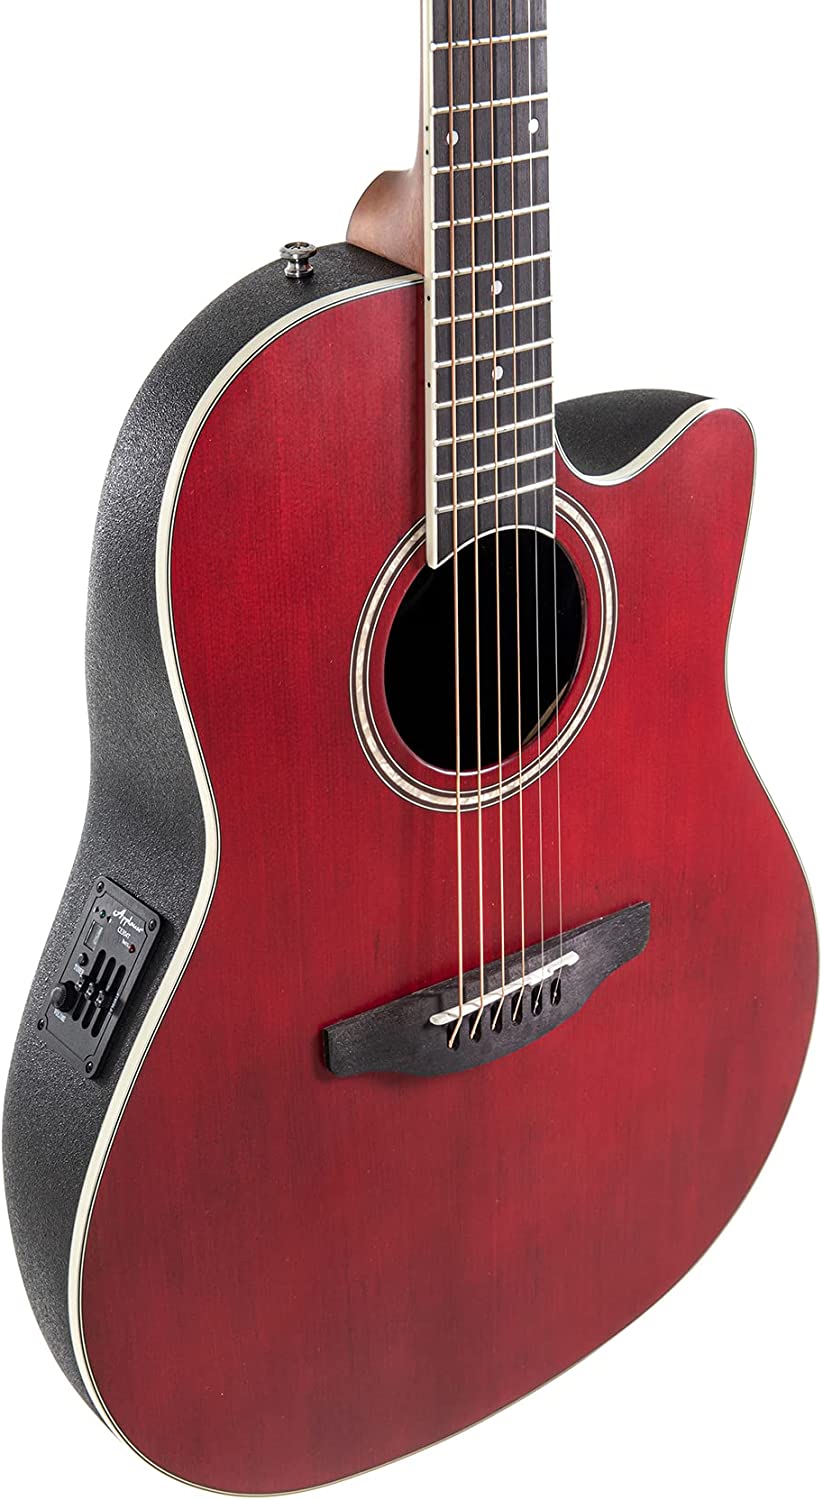 Электроакустическая гитара APPLAUSE AB24II-2S Balladeer Cutaway Ruby Red Satin